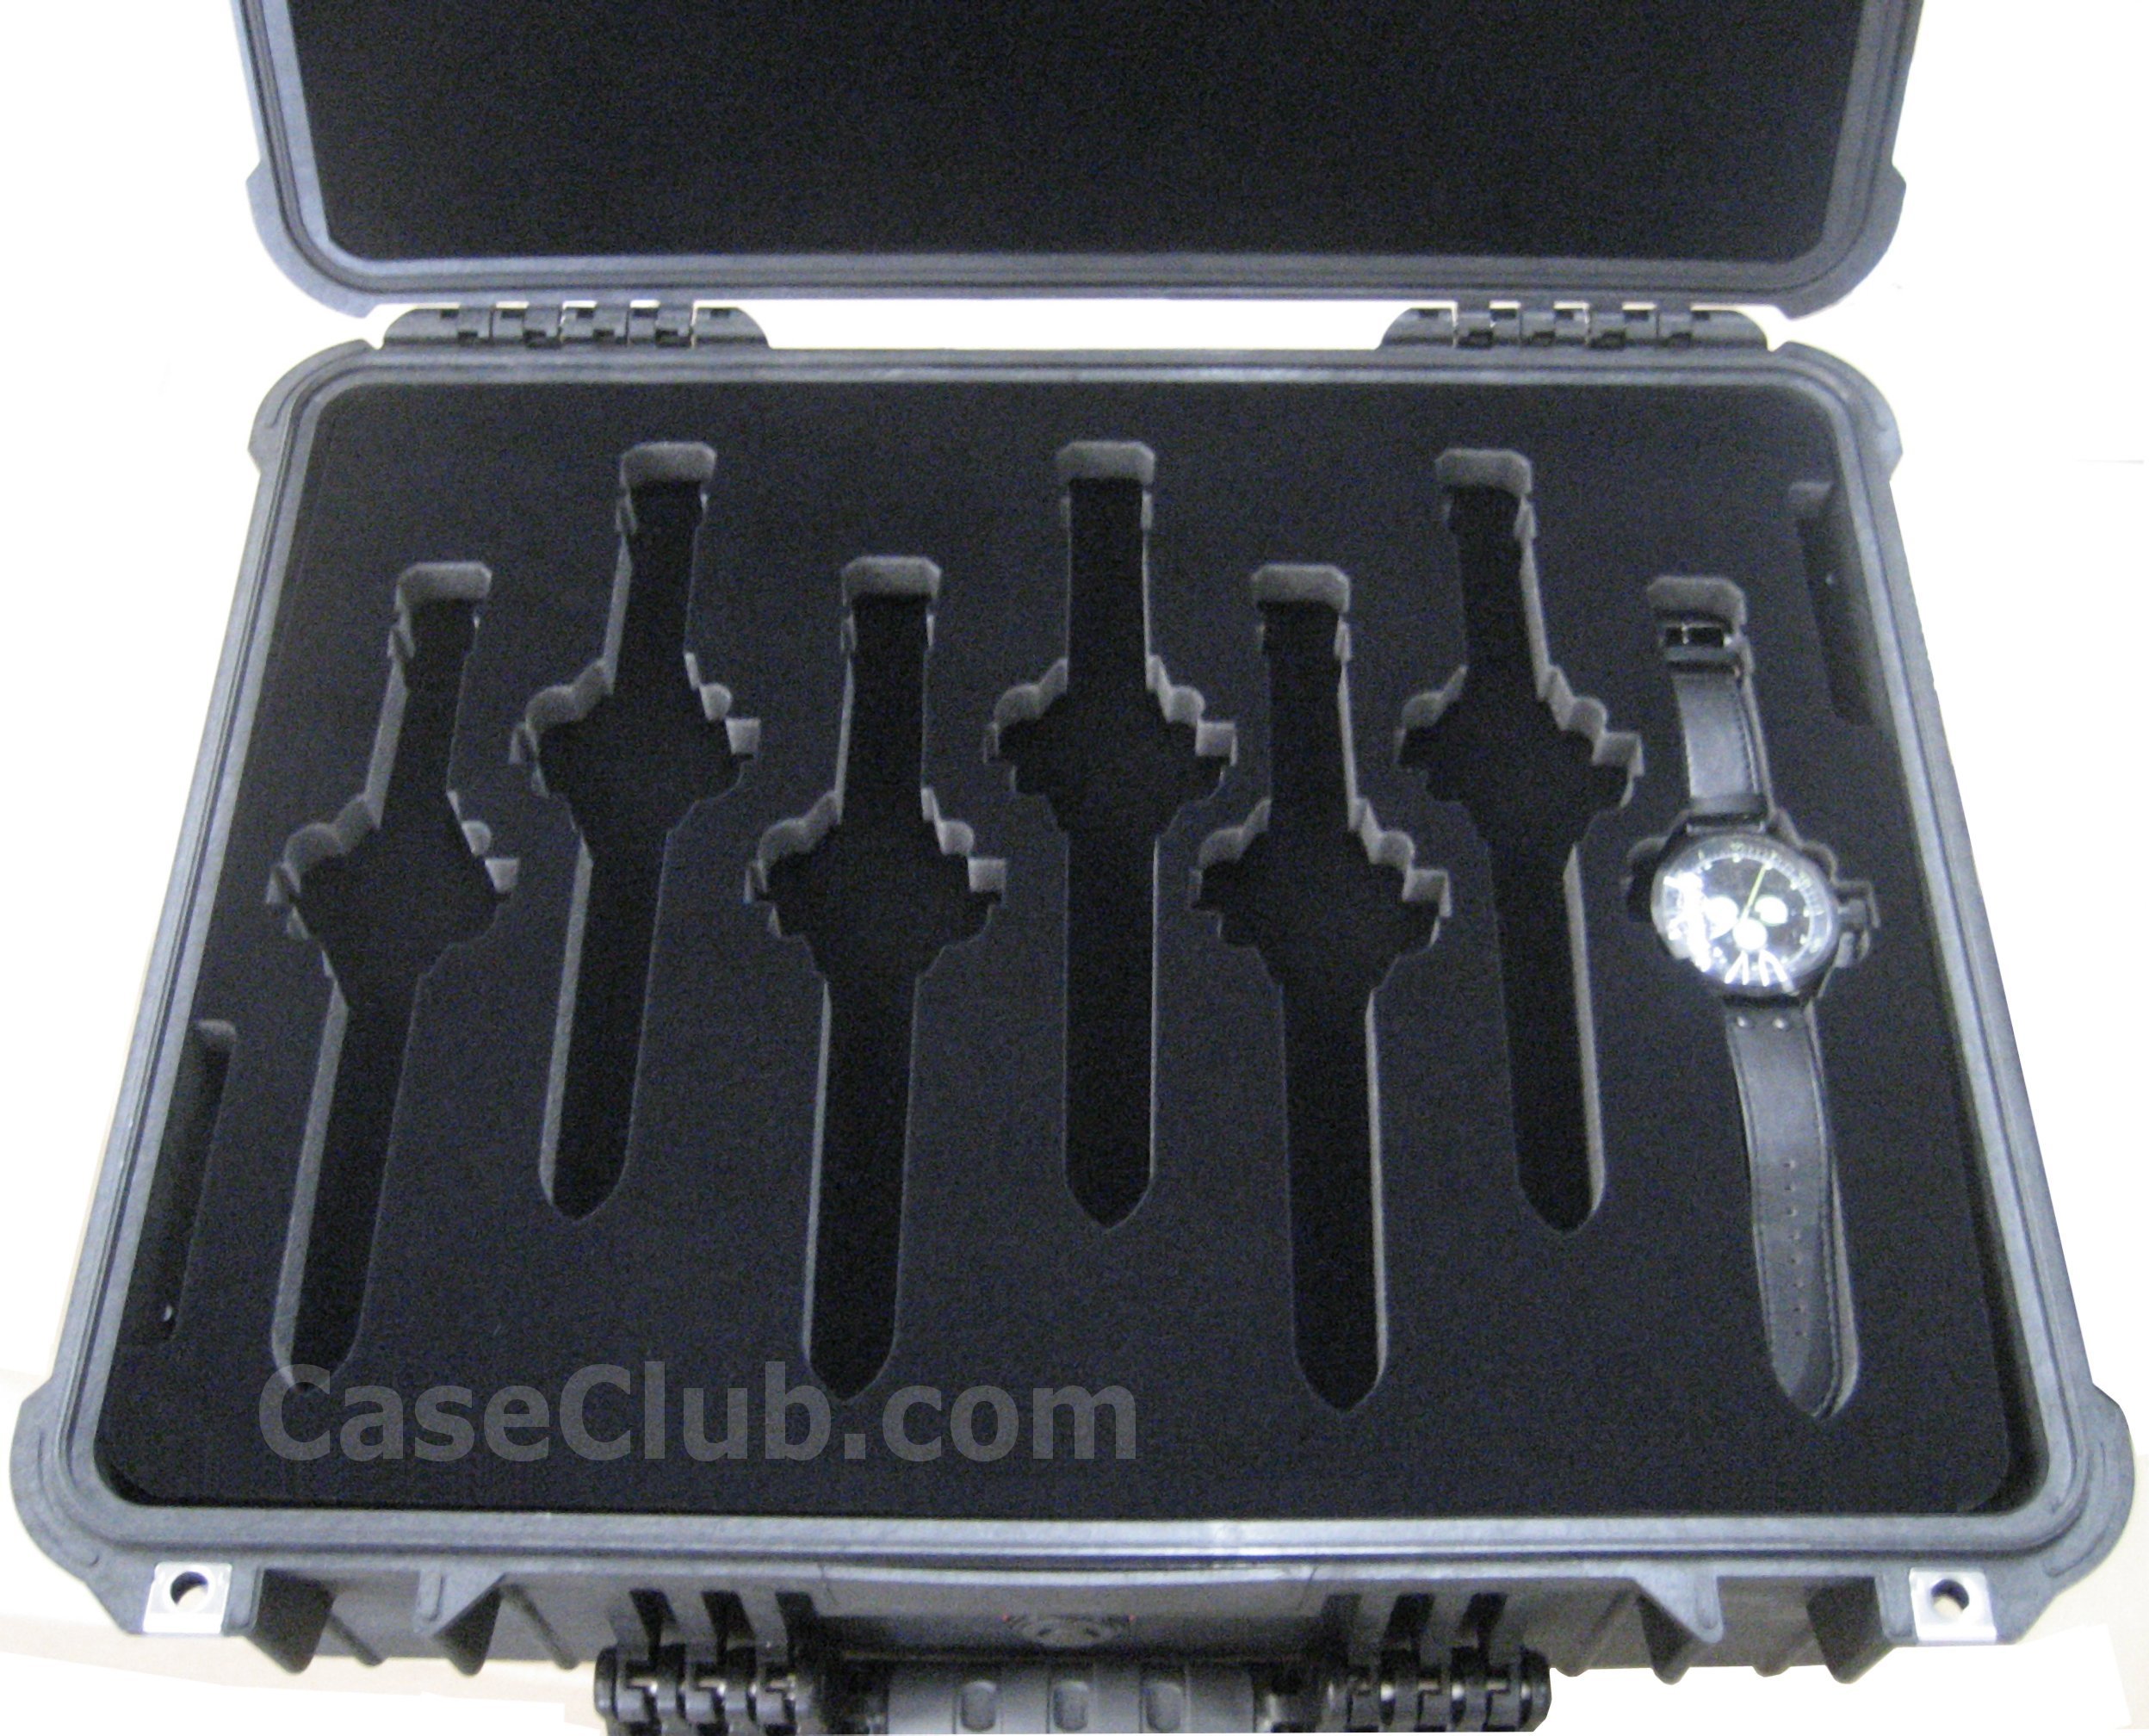 Custom Foam For Cases - Case Club